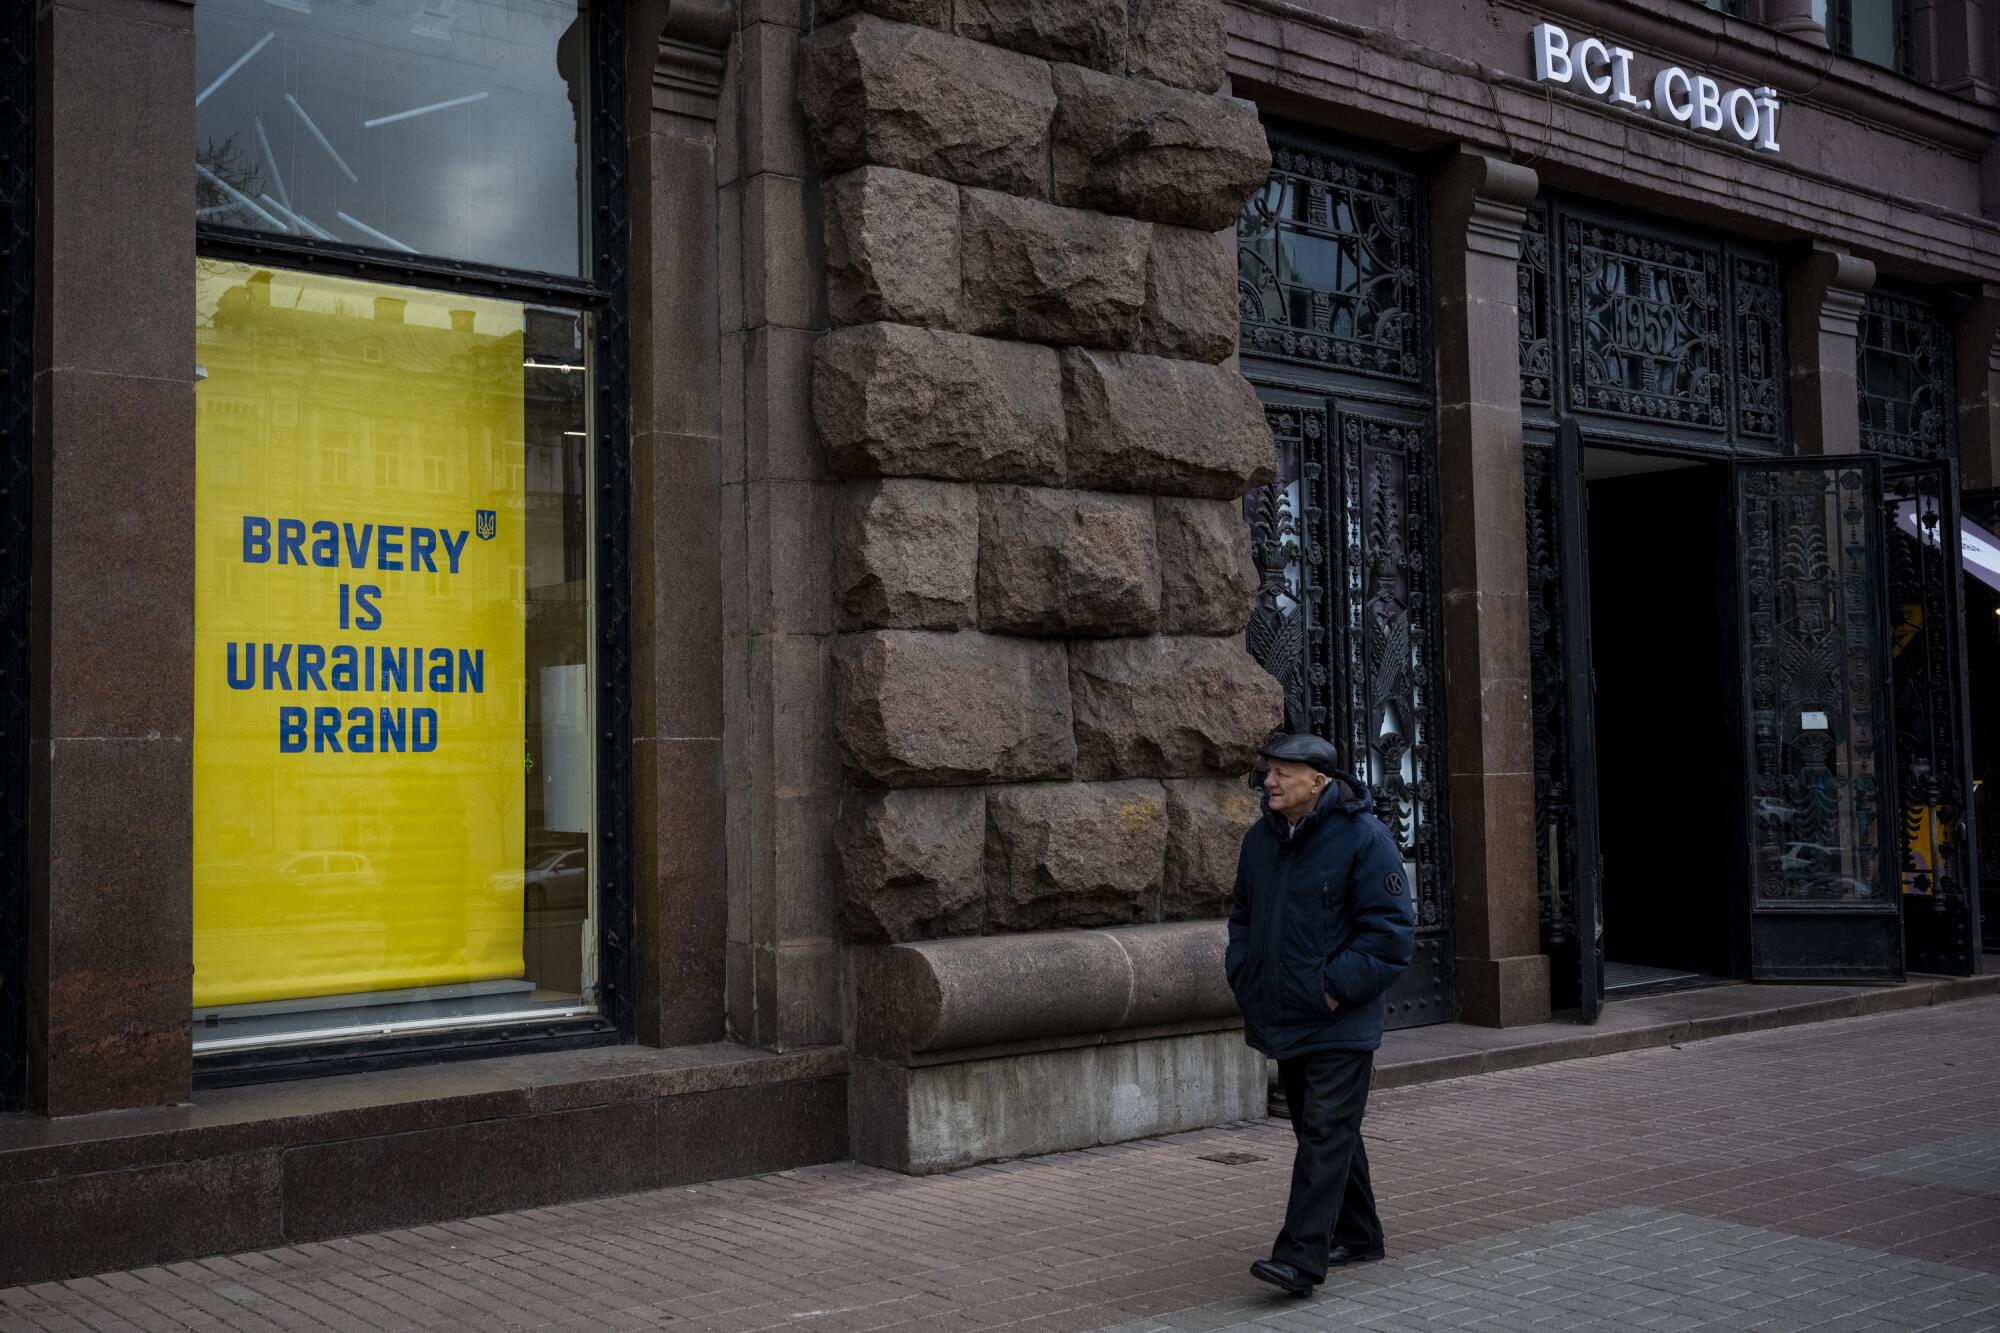 A man walks on a city sidewalk past a sign in a window reading "Bravery is Ukrainian brand."